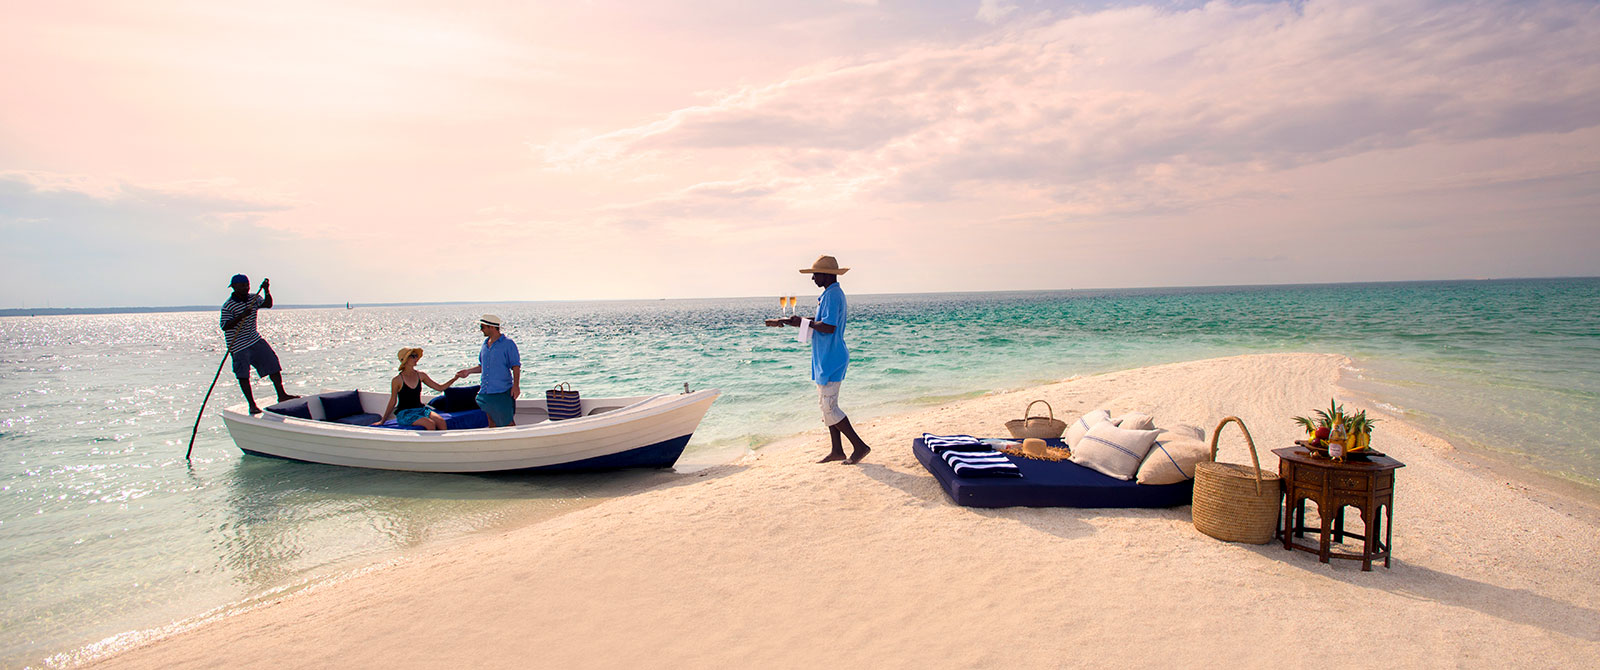 Romantic Beach Picnic in Mozambique - African Luxury Beach Resorts